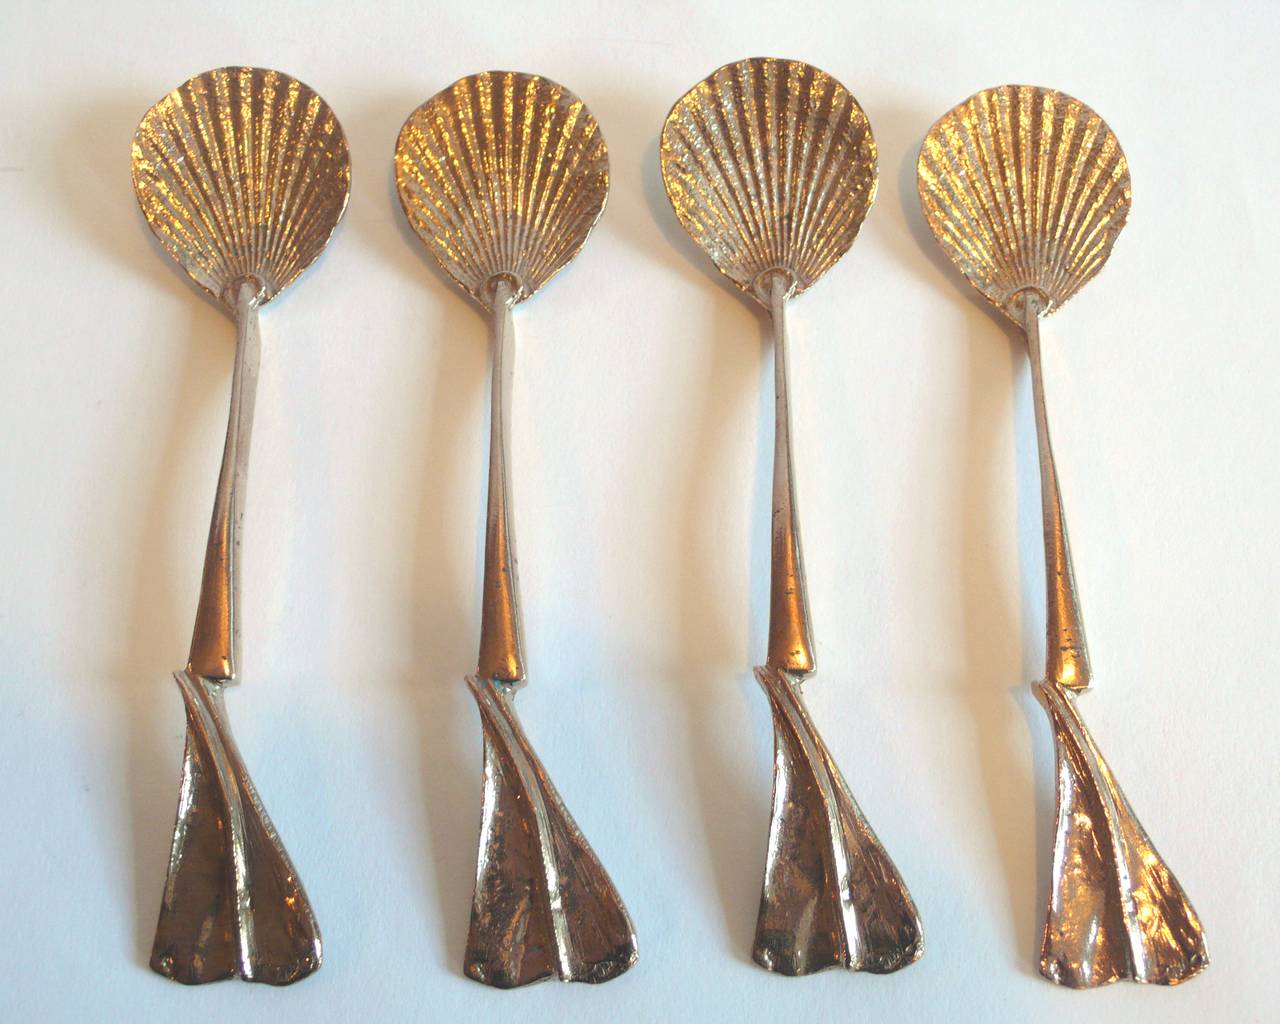 Set of four gilt bronze spoons by Claude Lalanne for Artcurial.

1991.